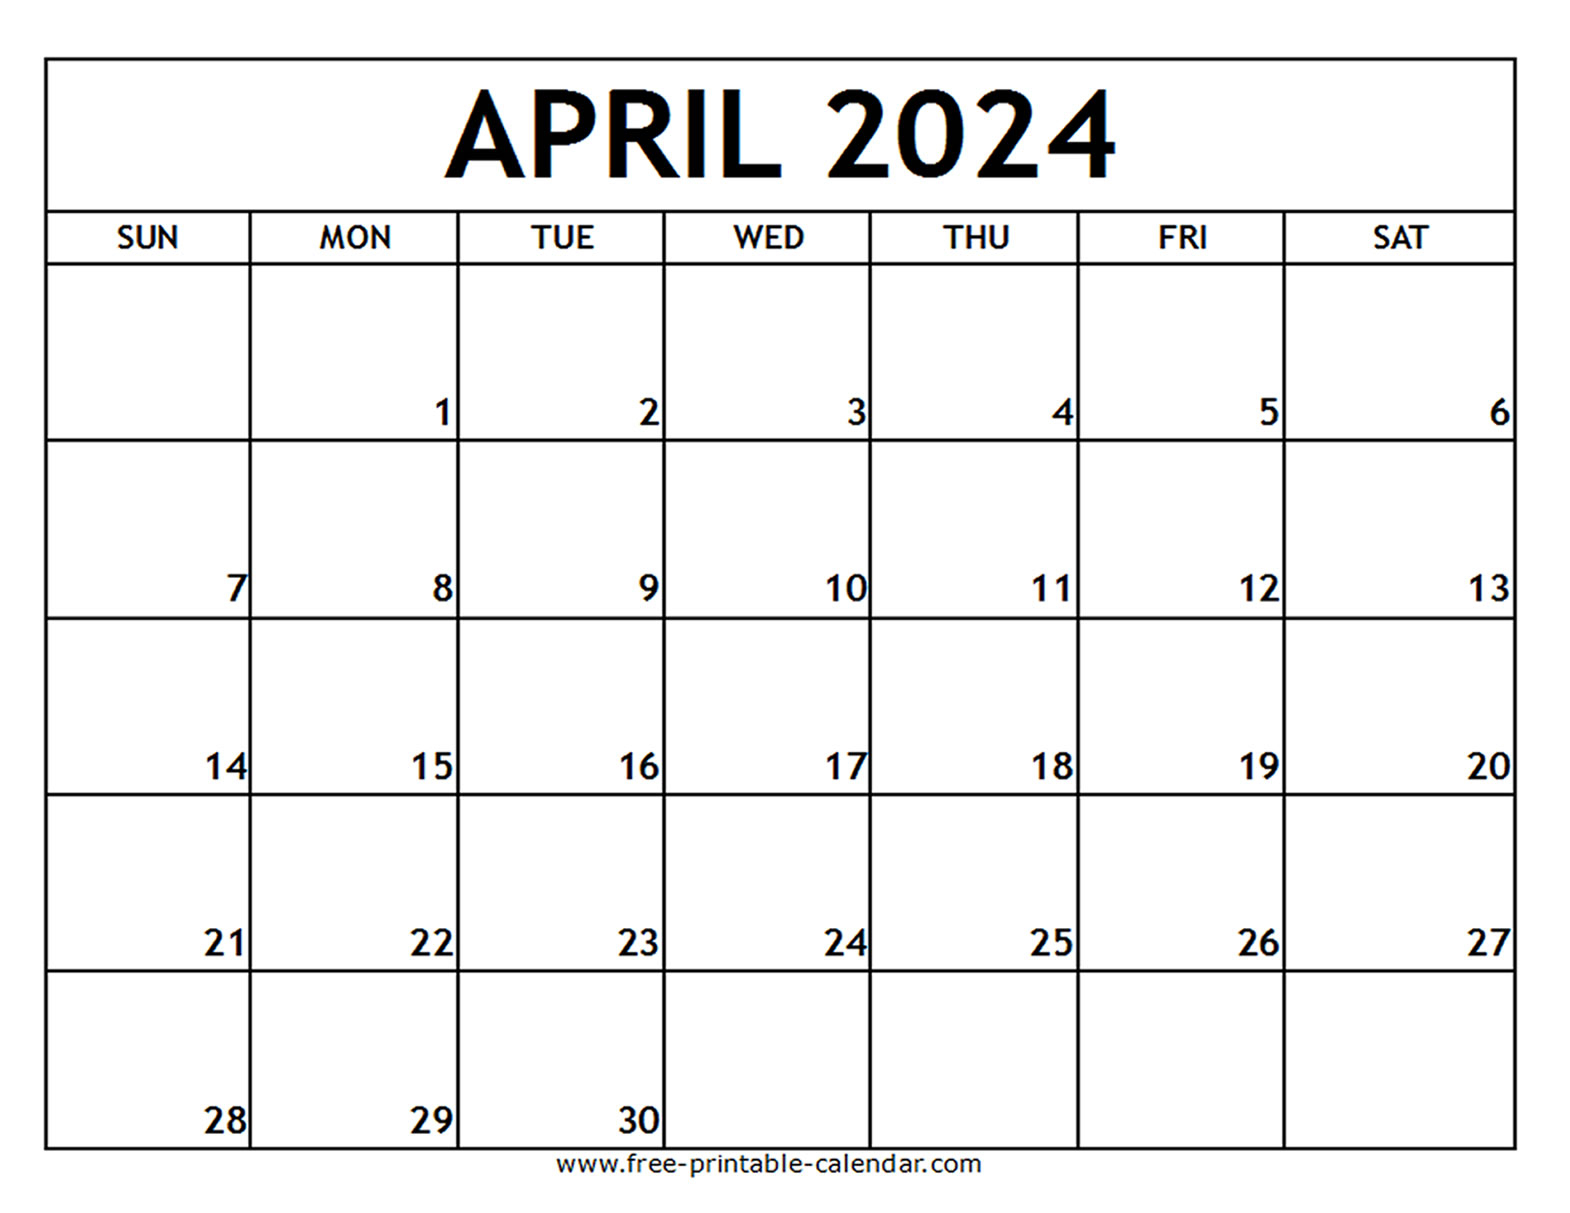 April 2024 Printable Calendar - Free-Printable-Calendar intended for April 2024 Calendar Template Free